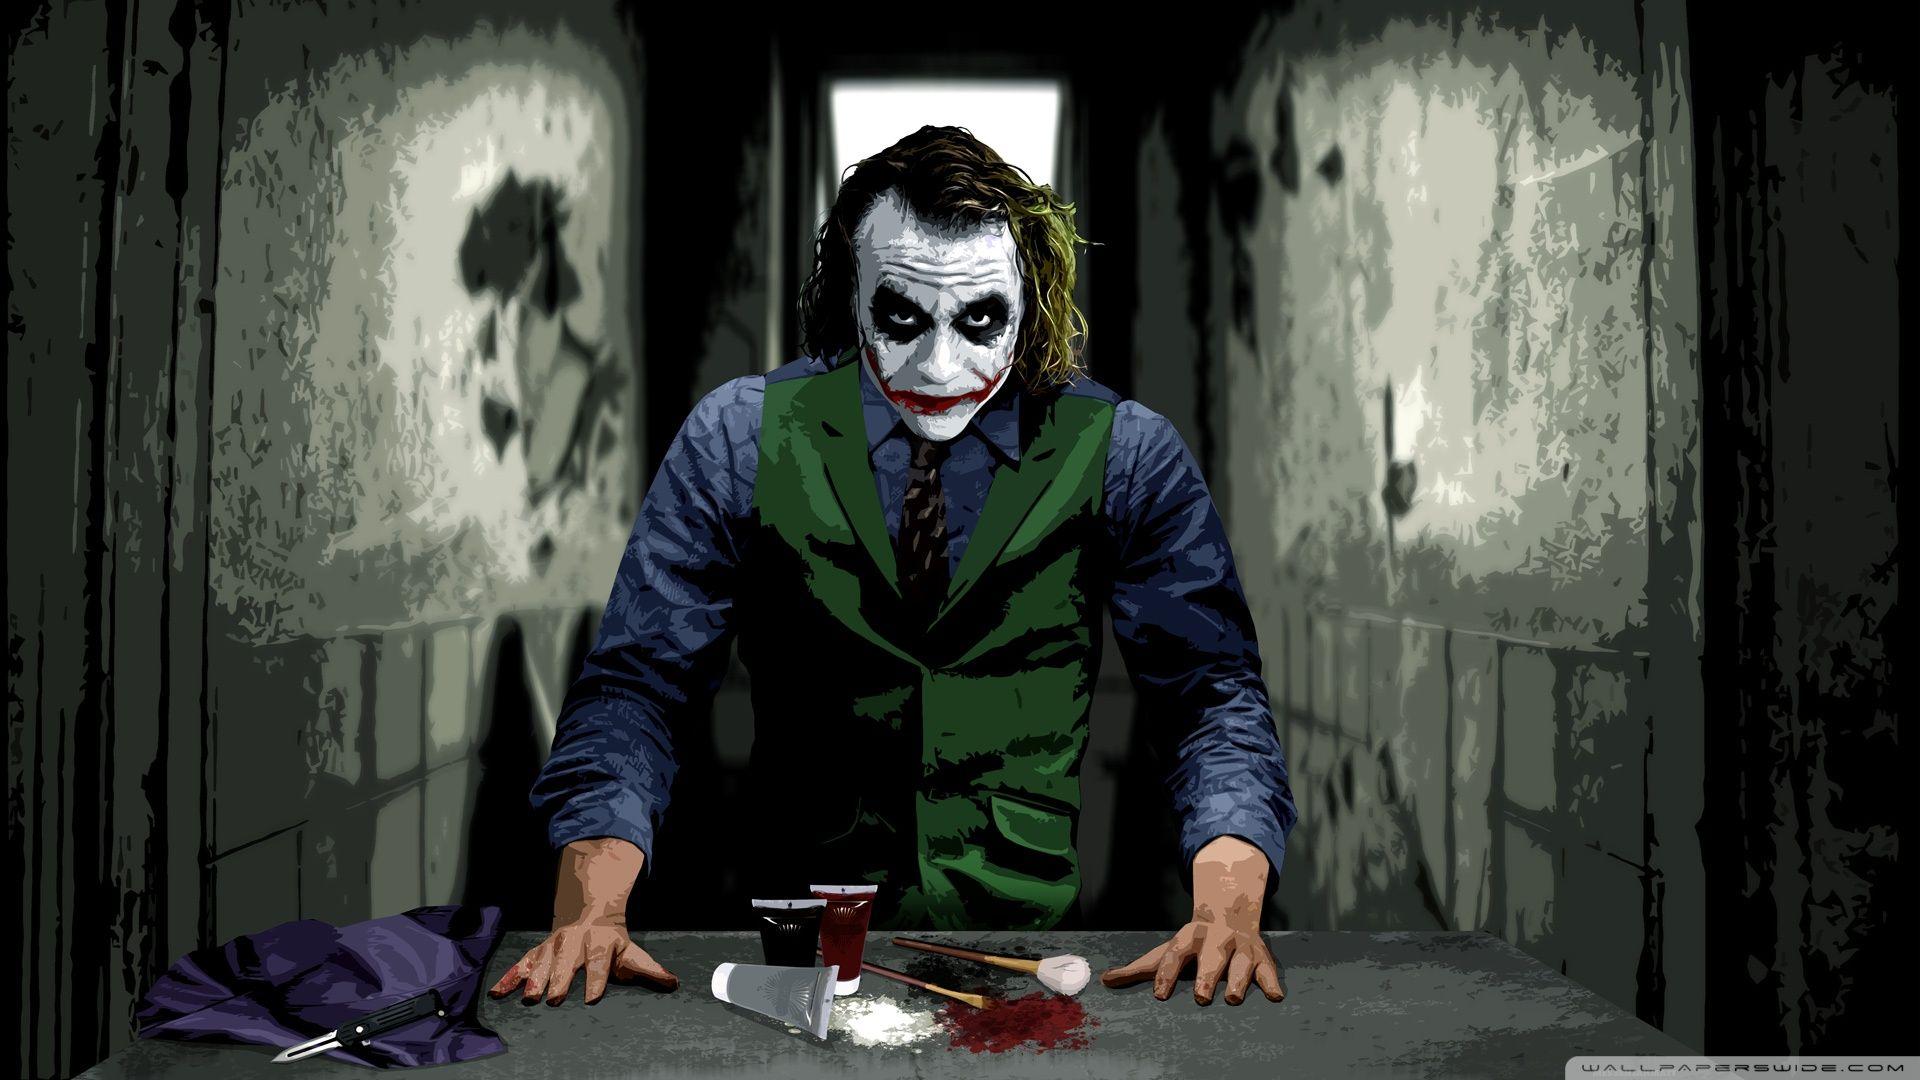 Joker Legend 4K Wallpapers